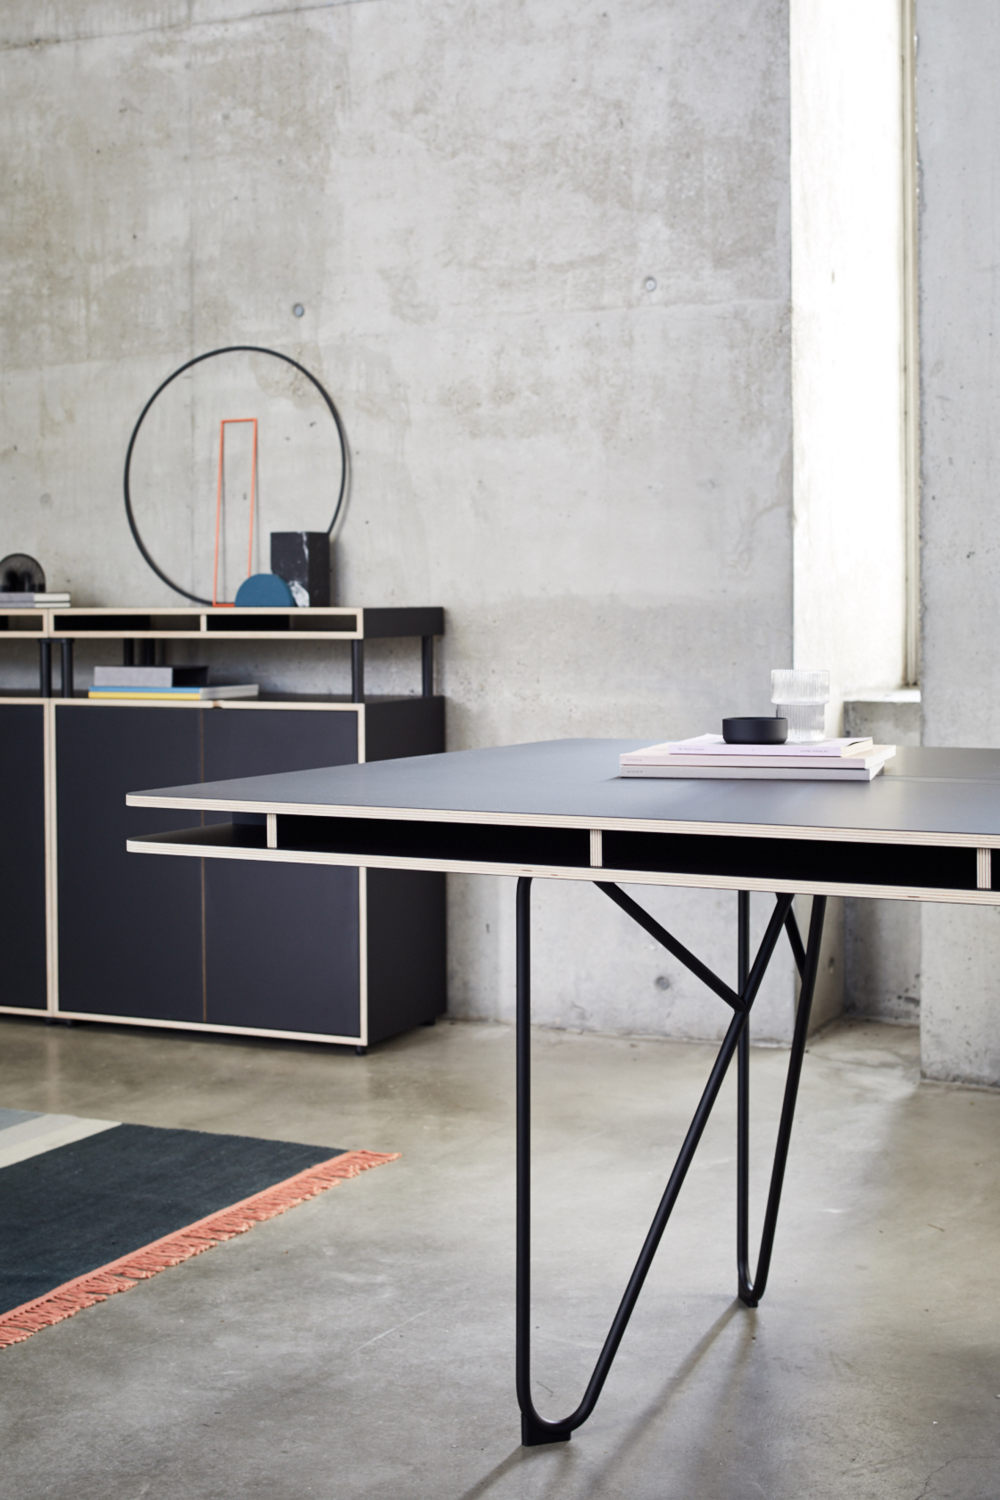 bene-studio-london-modular-workspace-system-furniture-design-promotion_rushi_hero1.jpg